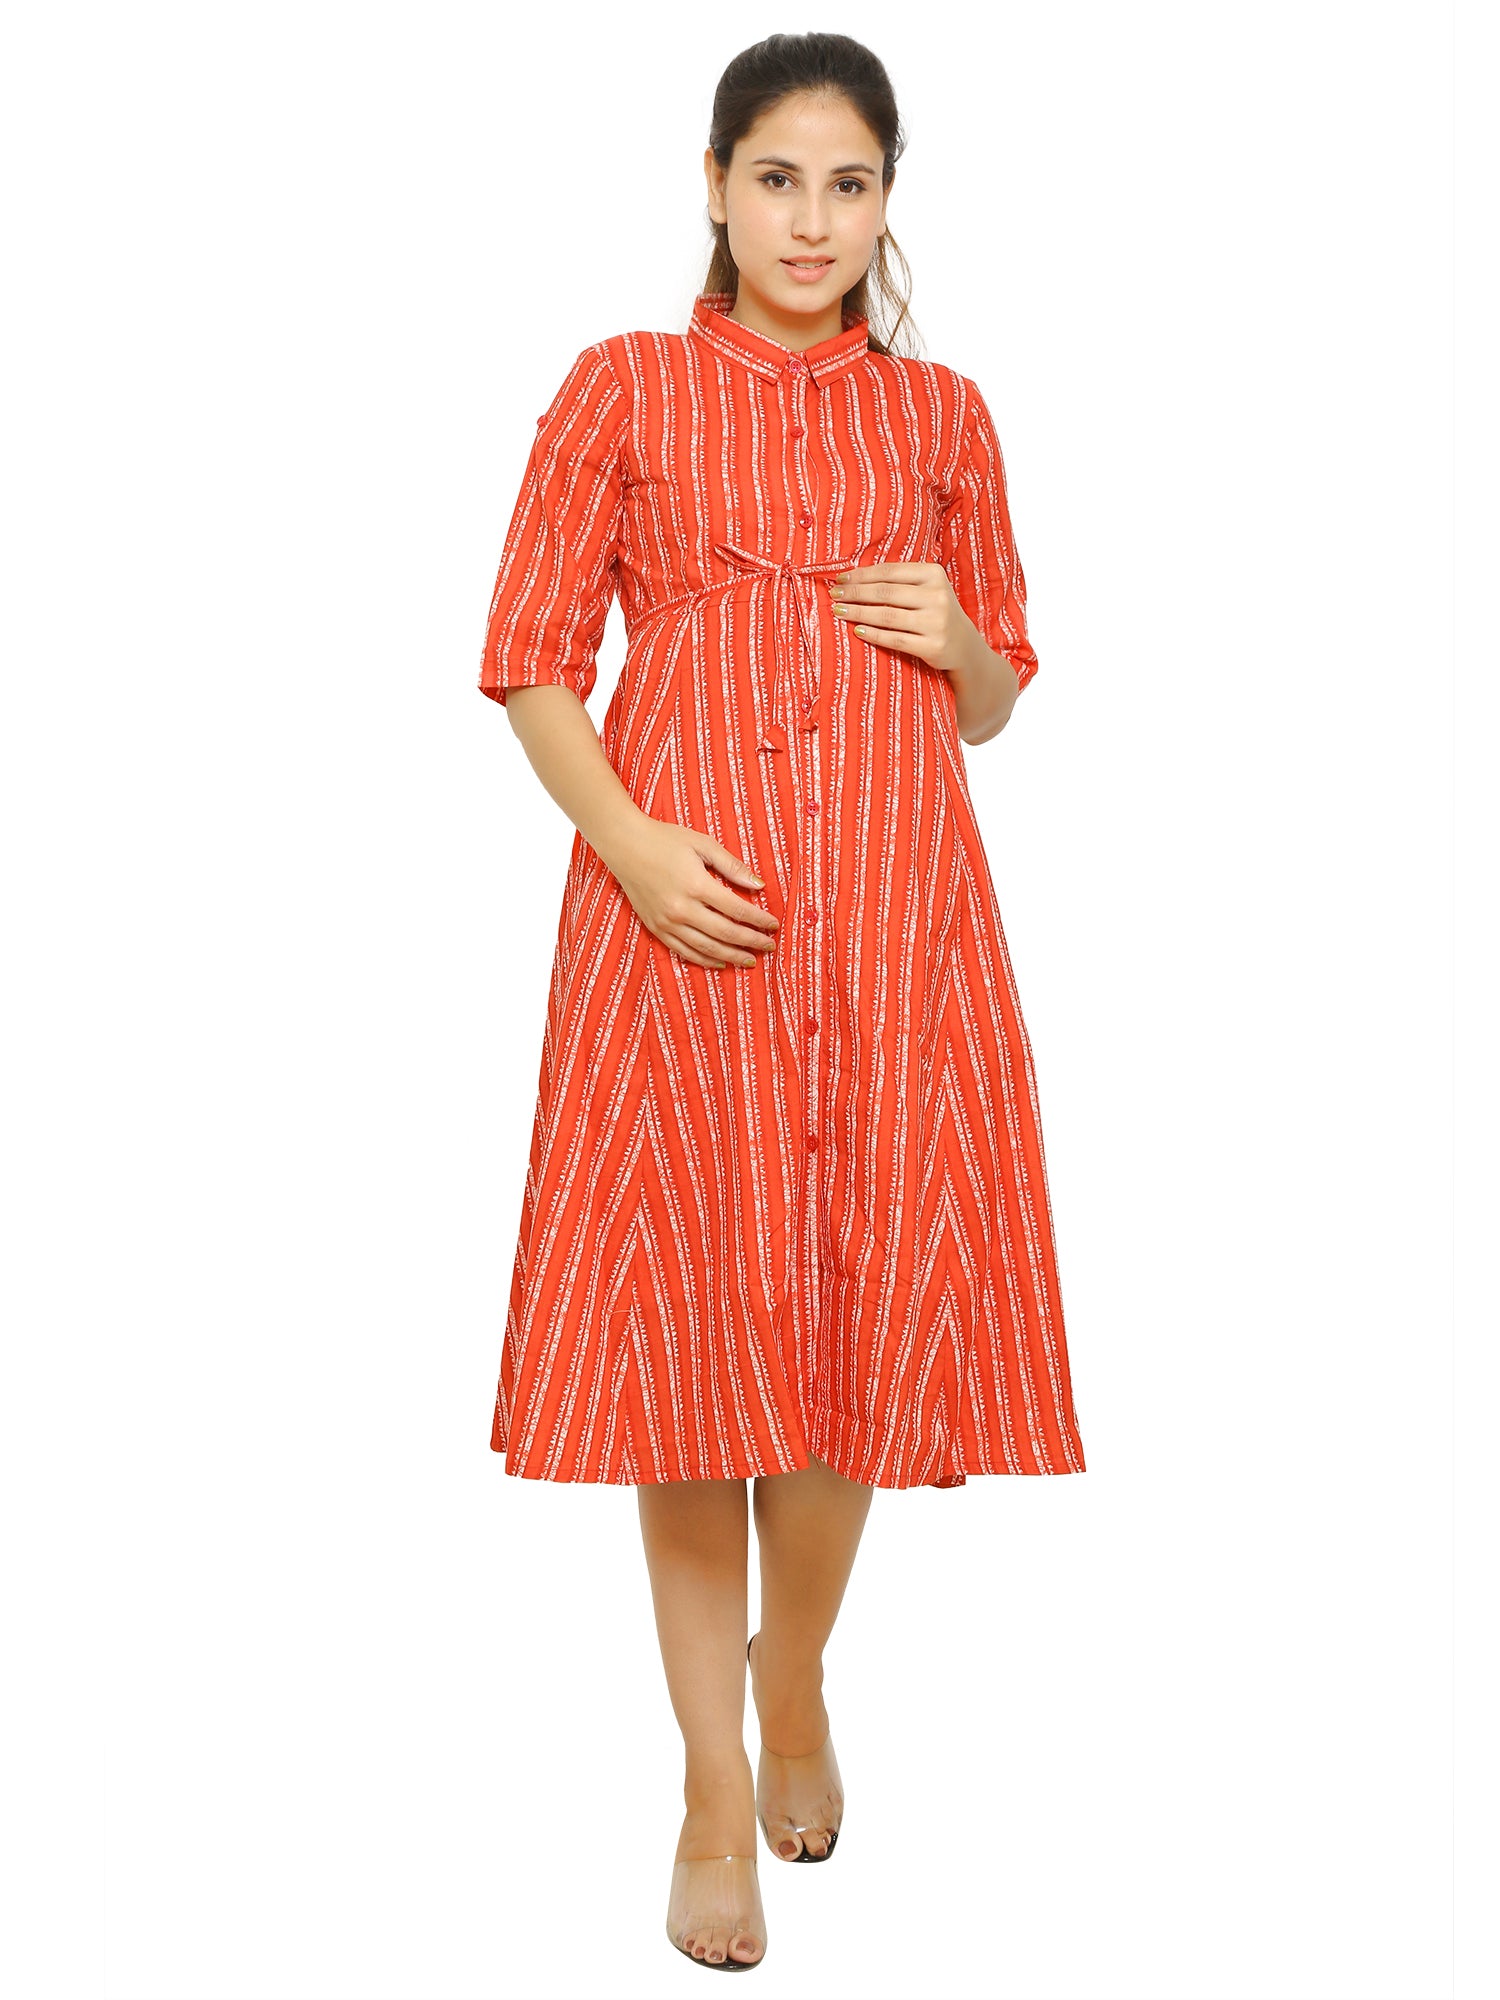 TUMMY – Organic Cotton Maternity Casual Dress – The Tummy Store